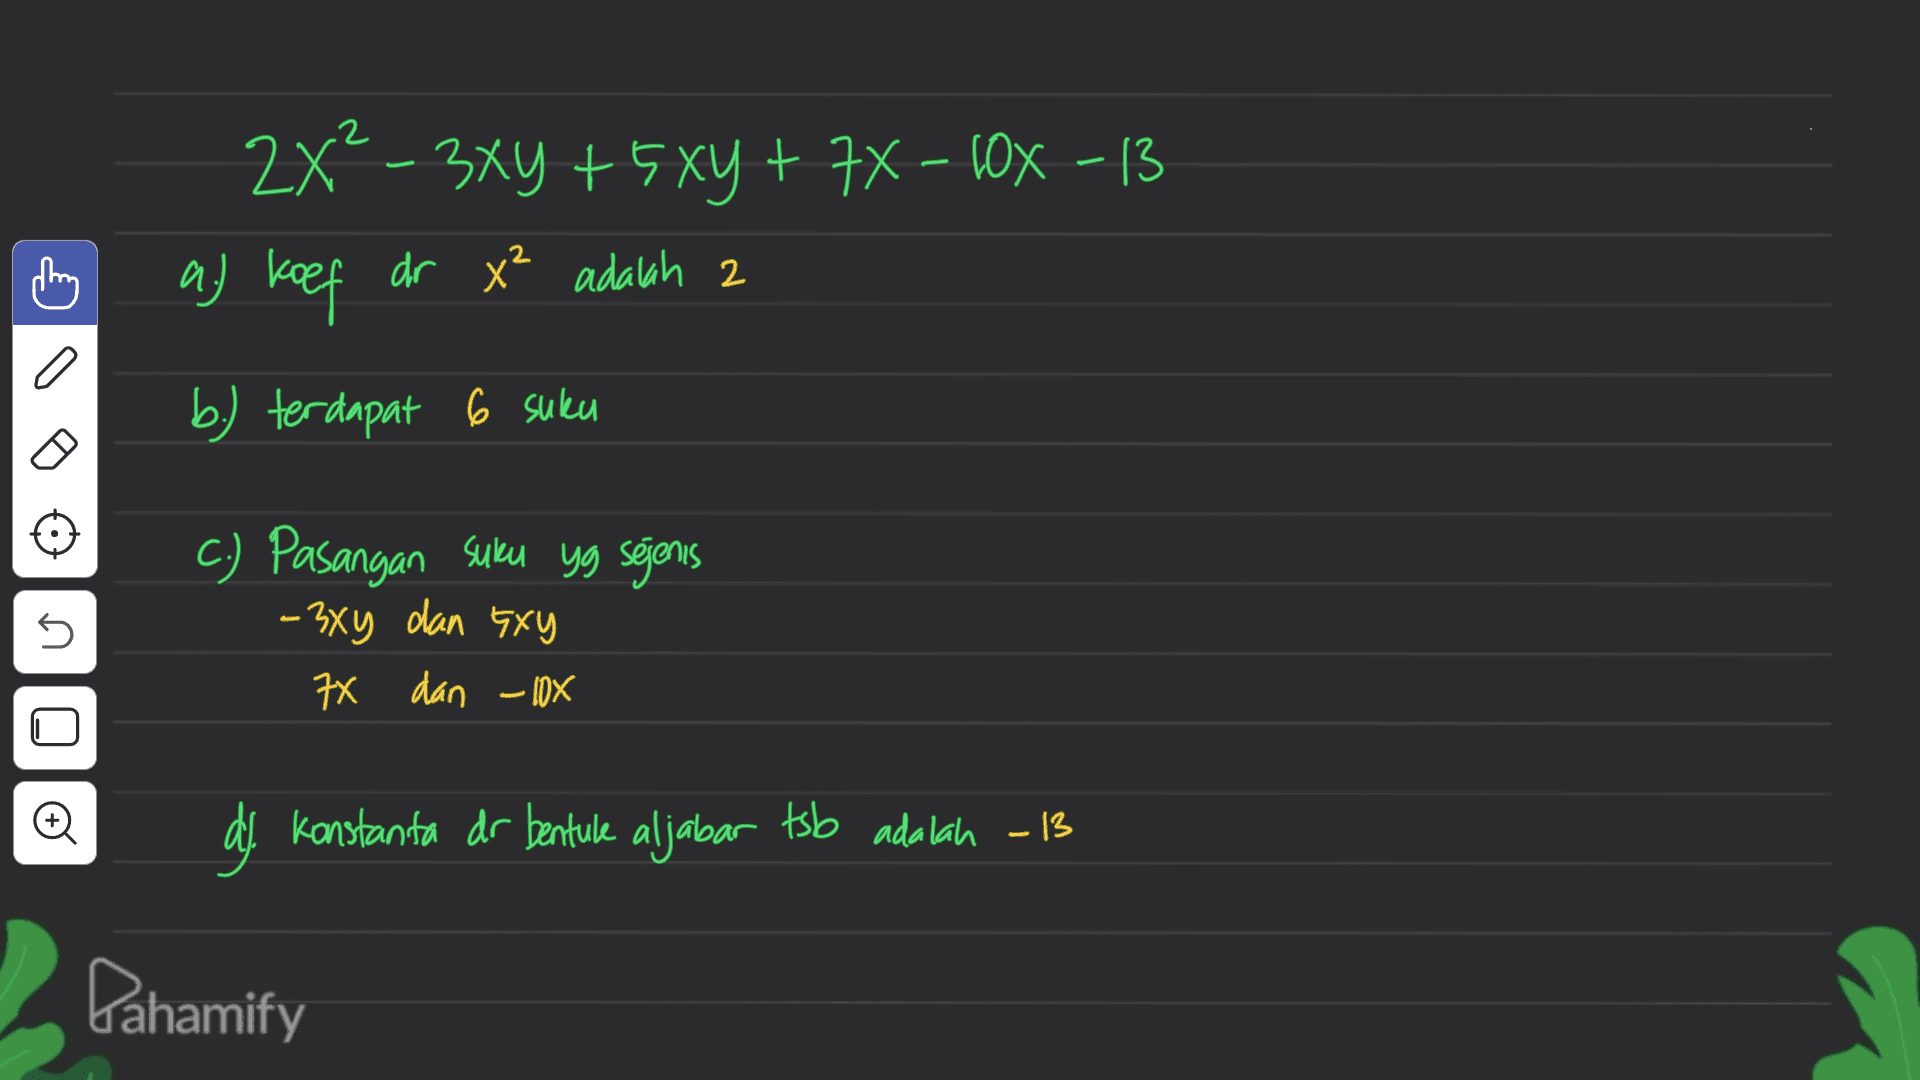 2X²-3y + 5xy + 7X - 10X-13 a) koef dr x² adalah 2 2 2 a b.) terdapat 6 suku s no C.) Pasangan suku yg sõjenis -3xy dan Exy 7X dan - 10X Đ dy Konstanta dr bentule aljabar tsb adalah -13 Pahamify 